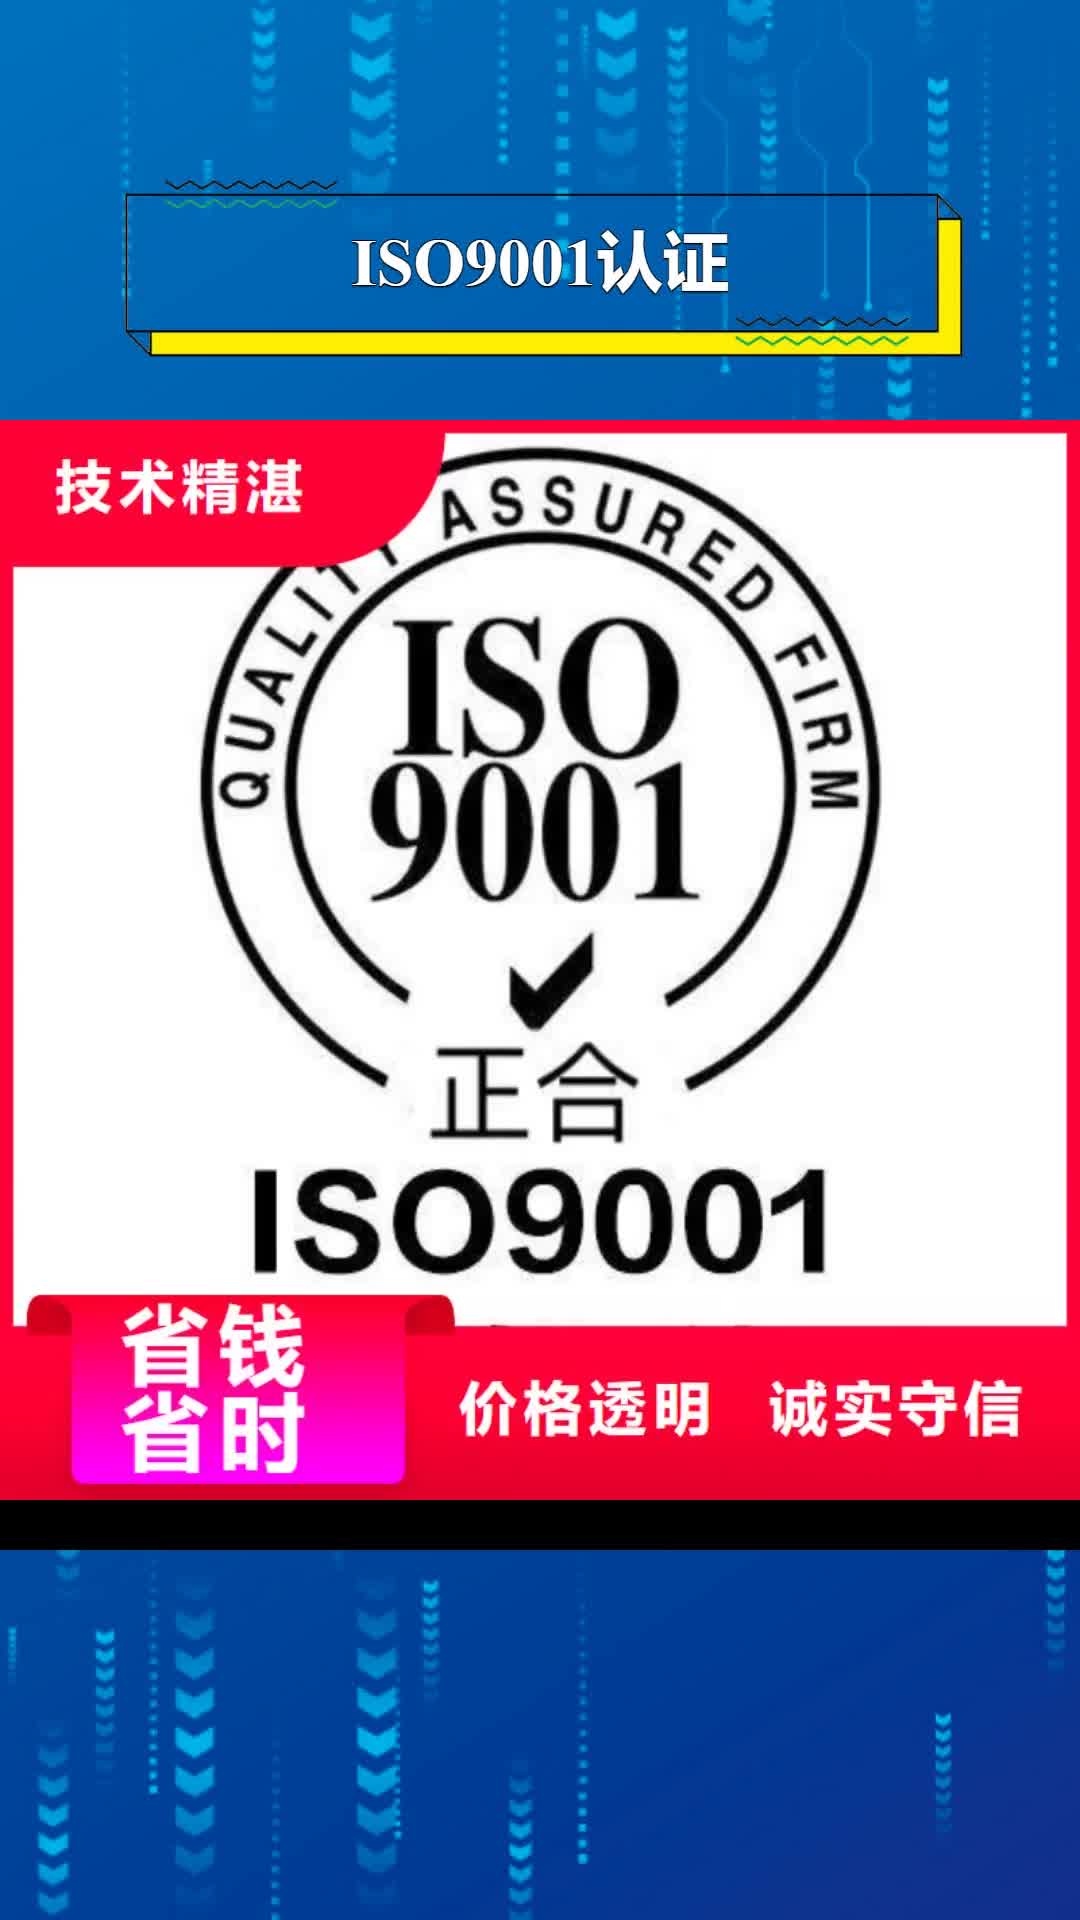 佛山【ISO9001认证】_ISO13485认证技术可靠